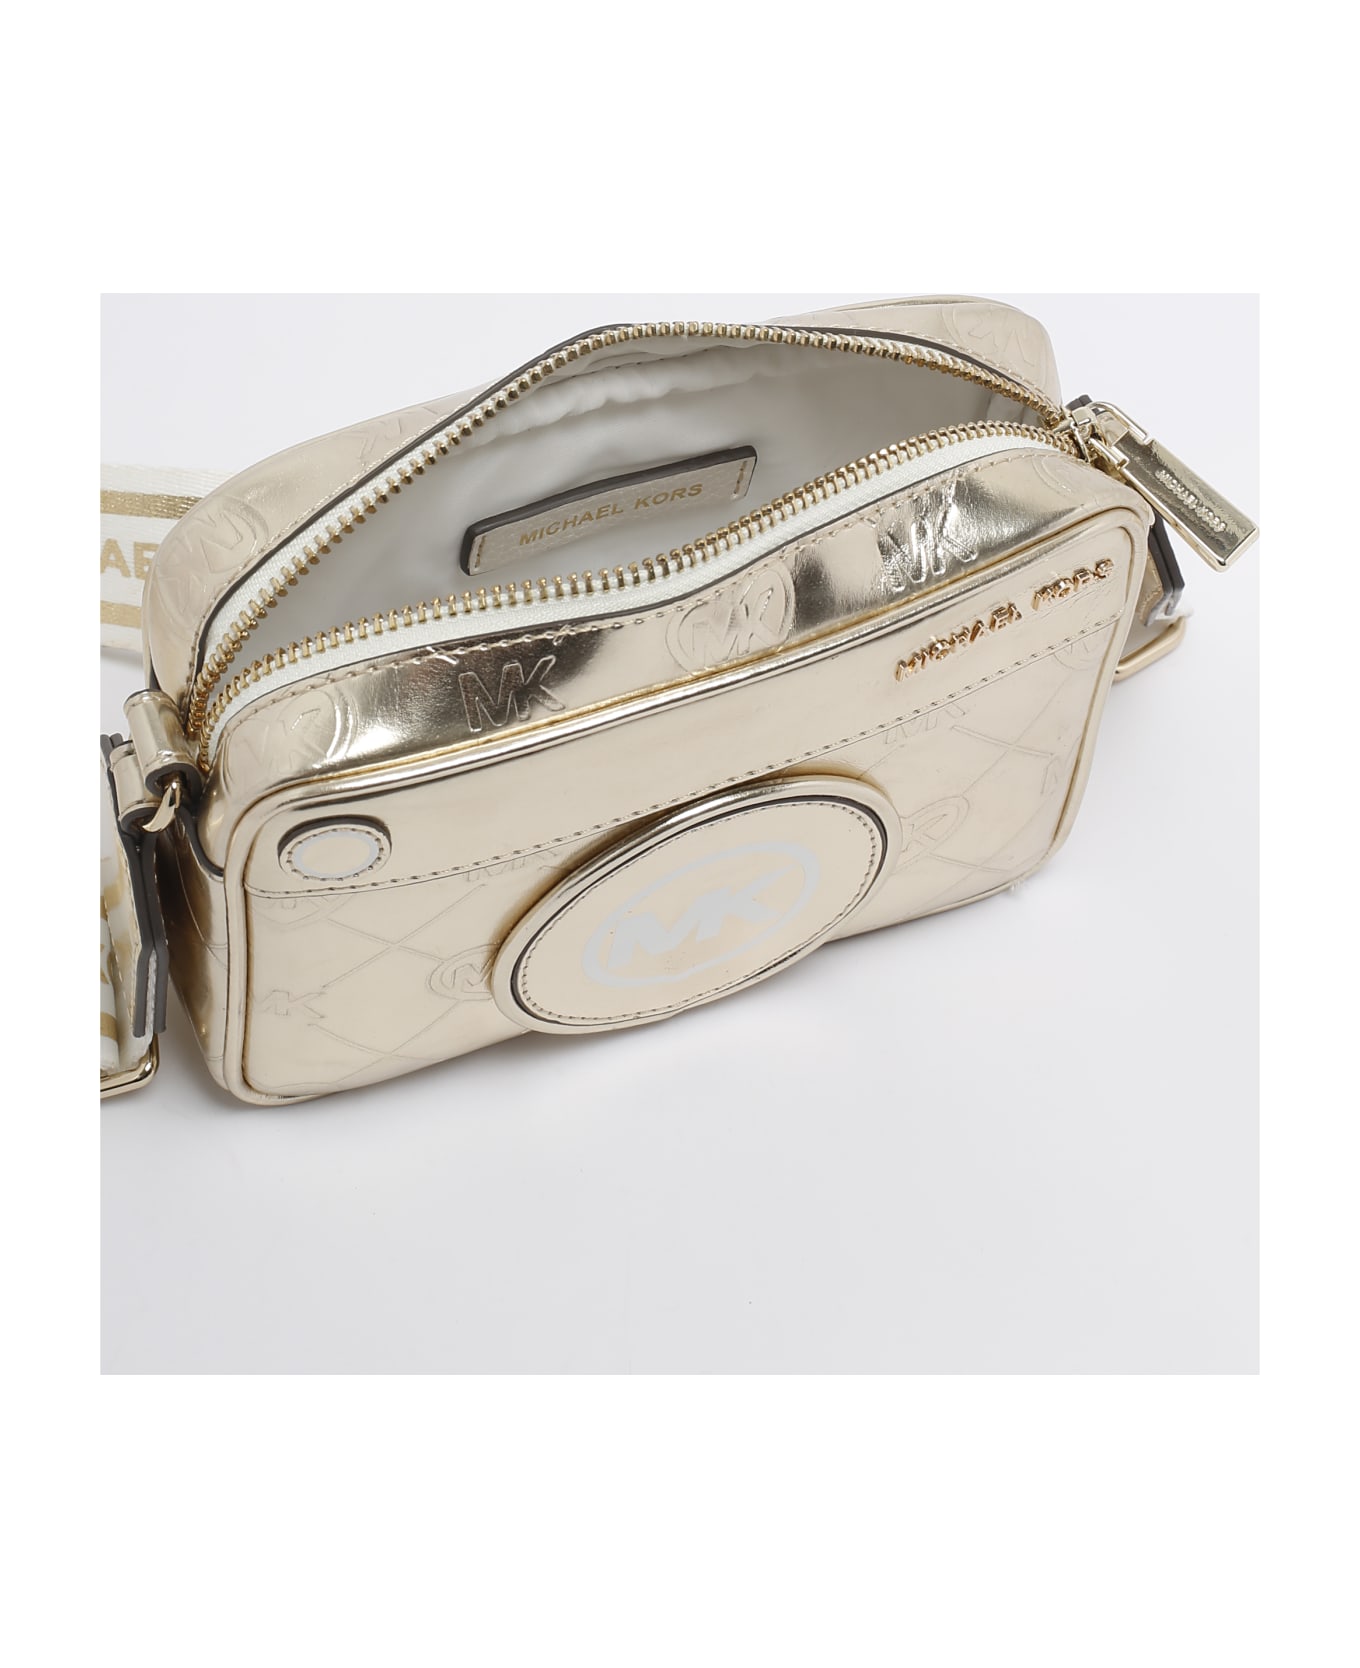 Michael Kors Handbag Clutch - ORO